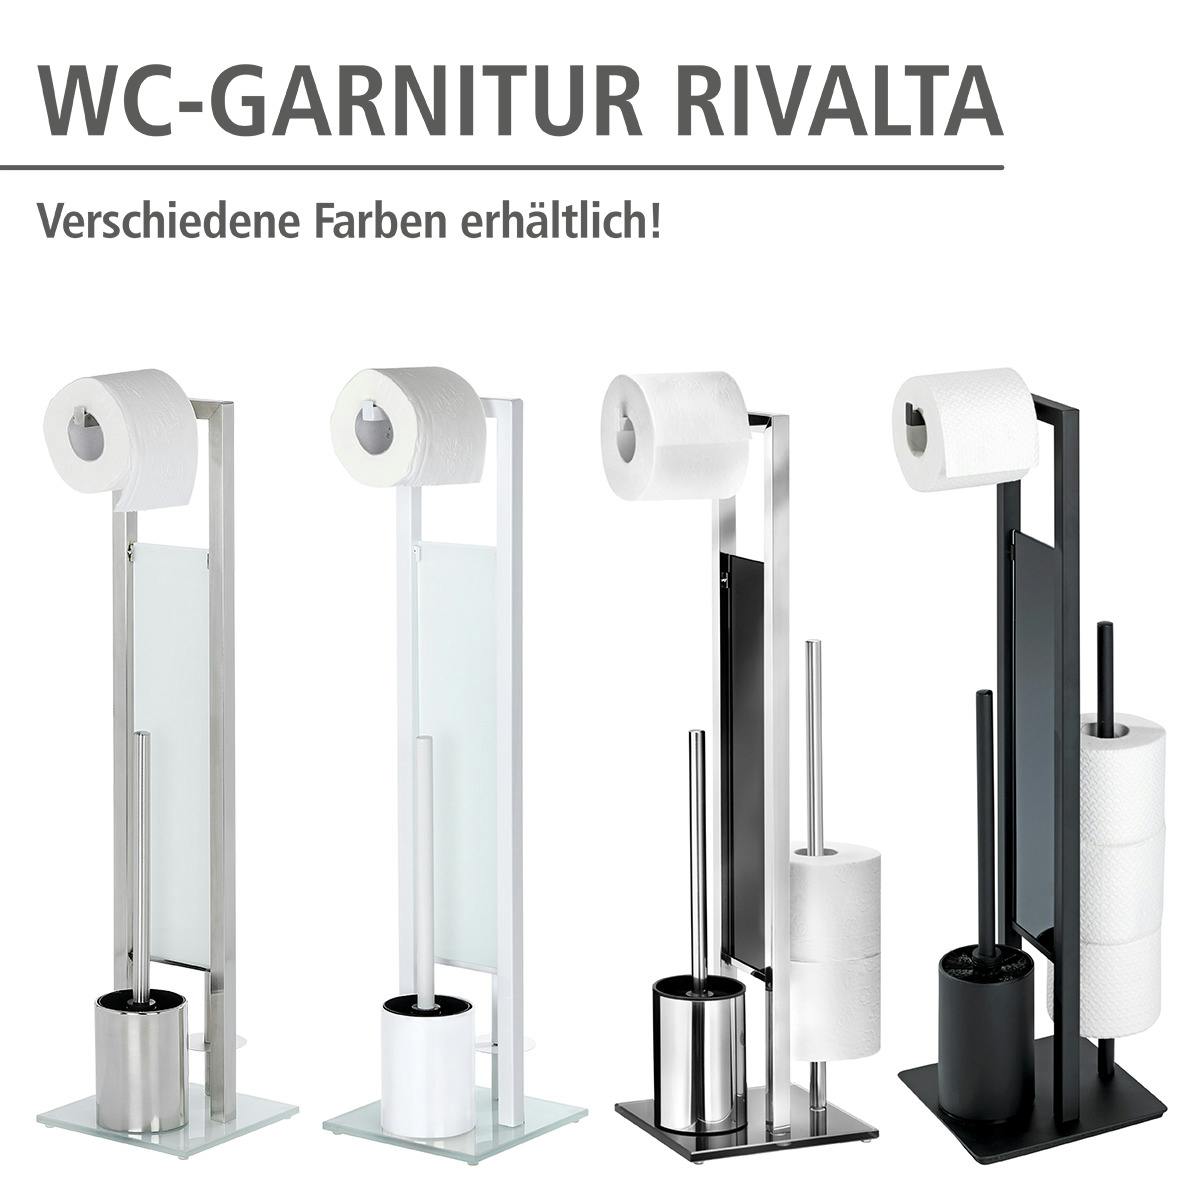 WENKO Stand WC-Garnitur Rivalta Edelstahl Matt | METRO Marktplatz